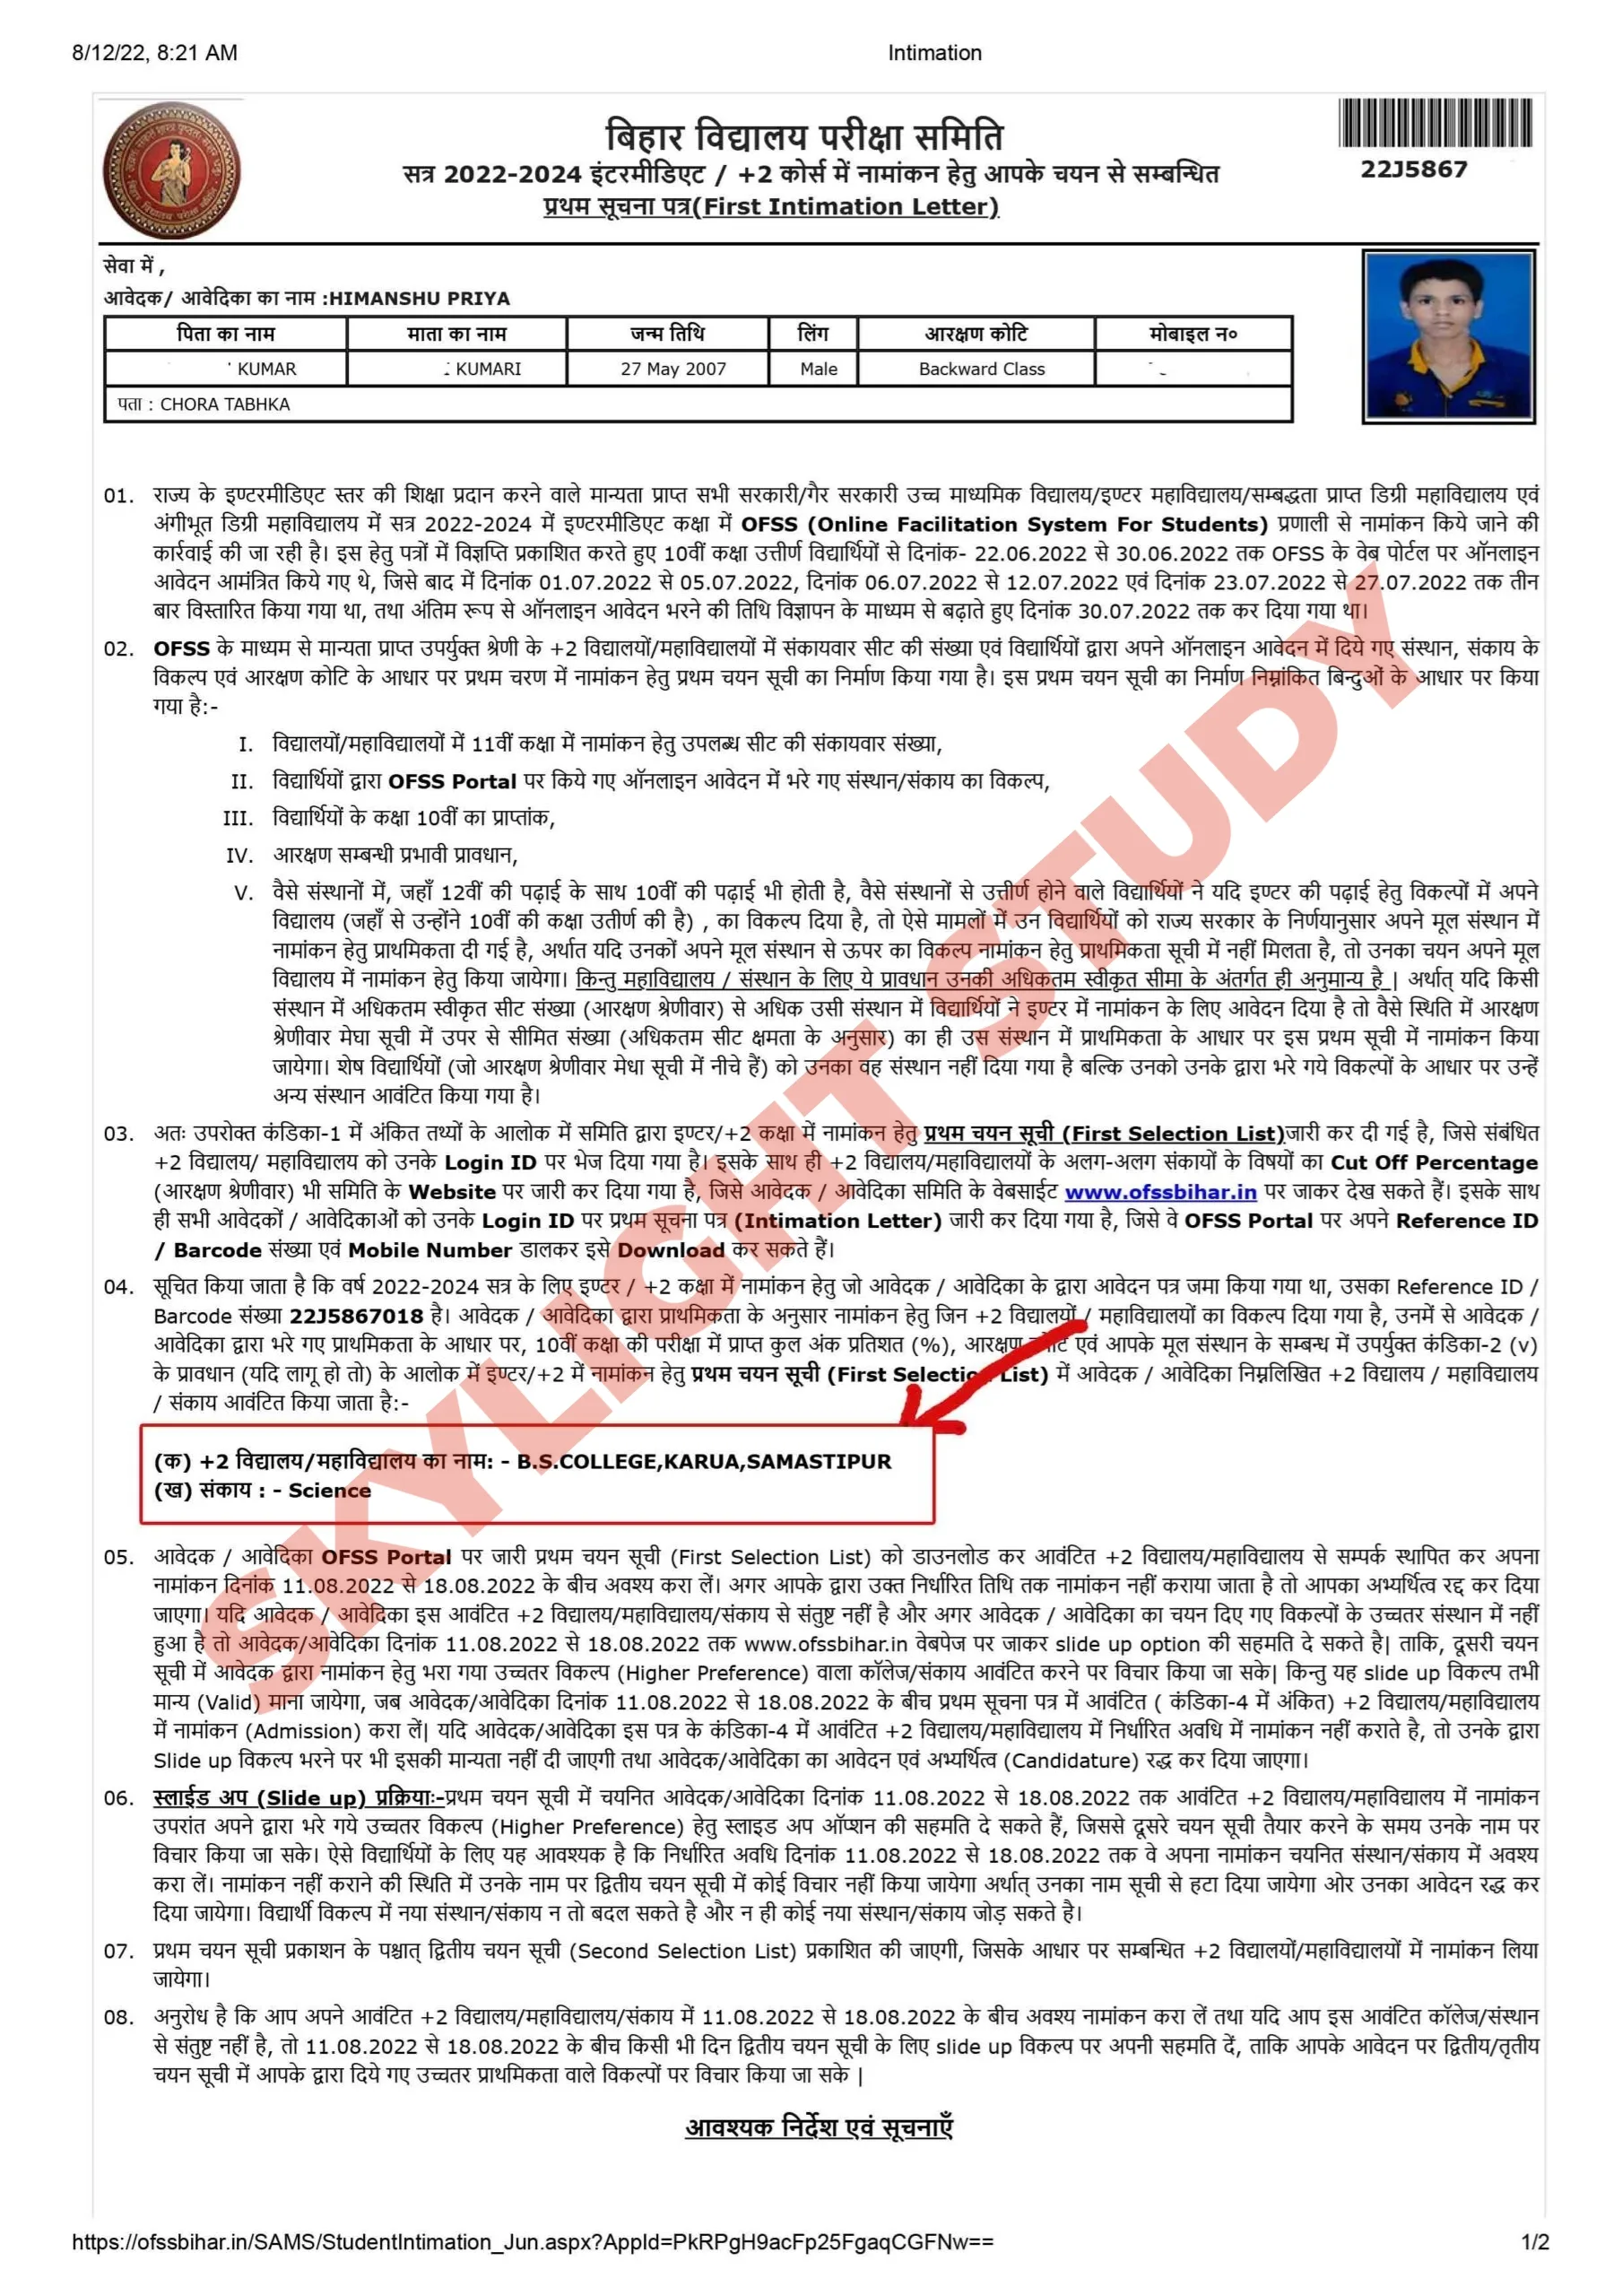 Bihar Board inter 11th Admission 1st Merit List intimation letter